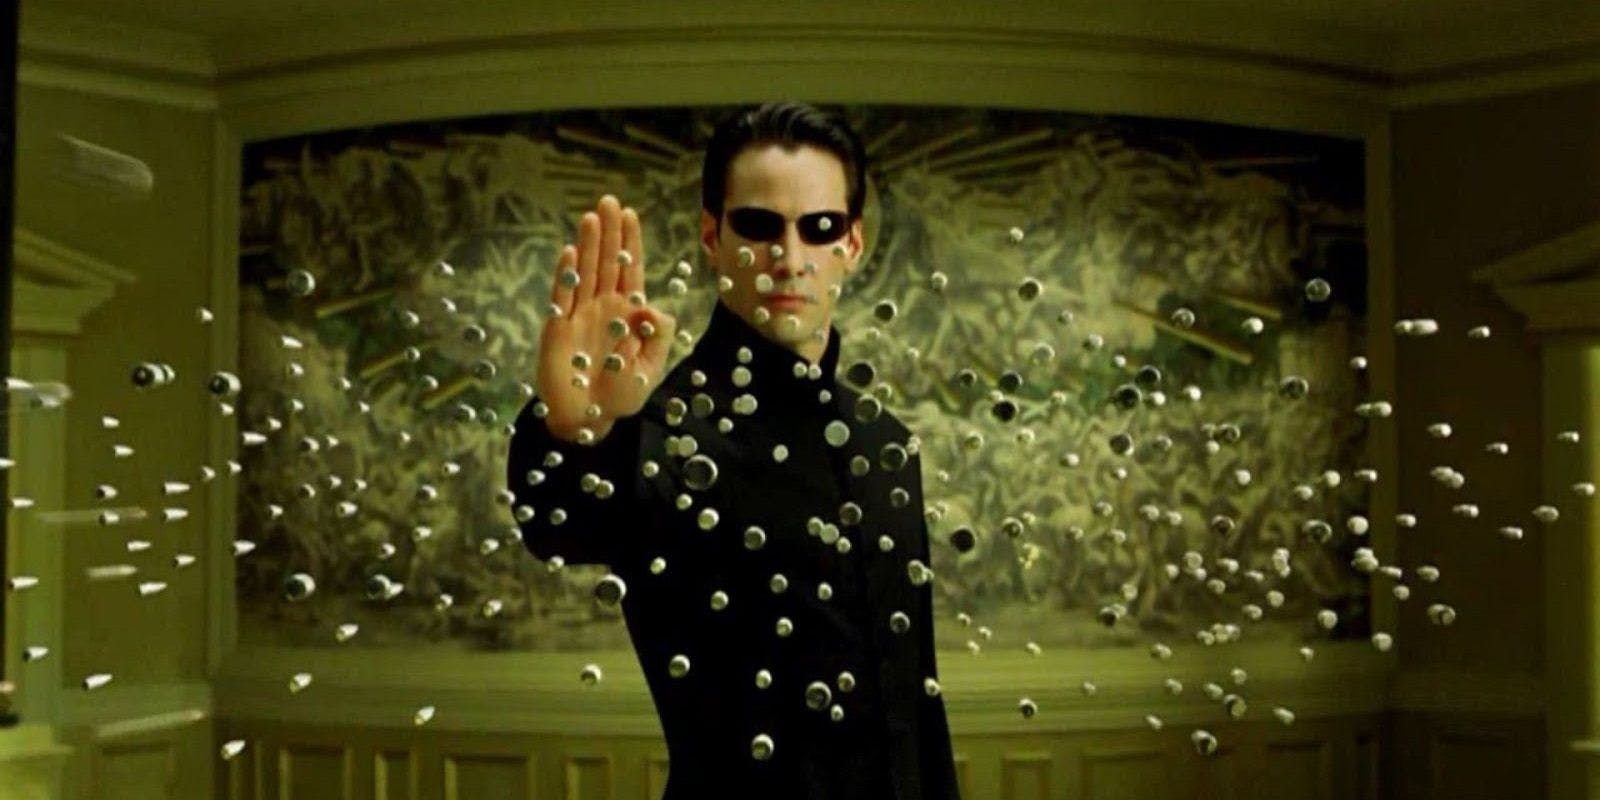 Neo stops bullets in The Matrix Reloaded